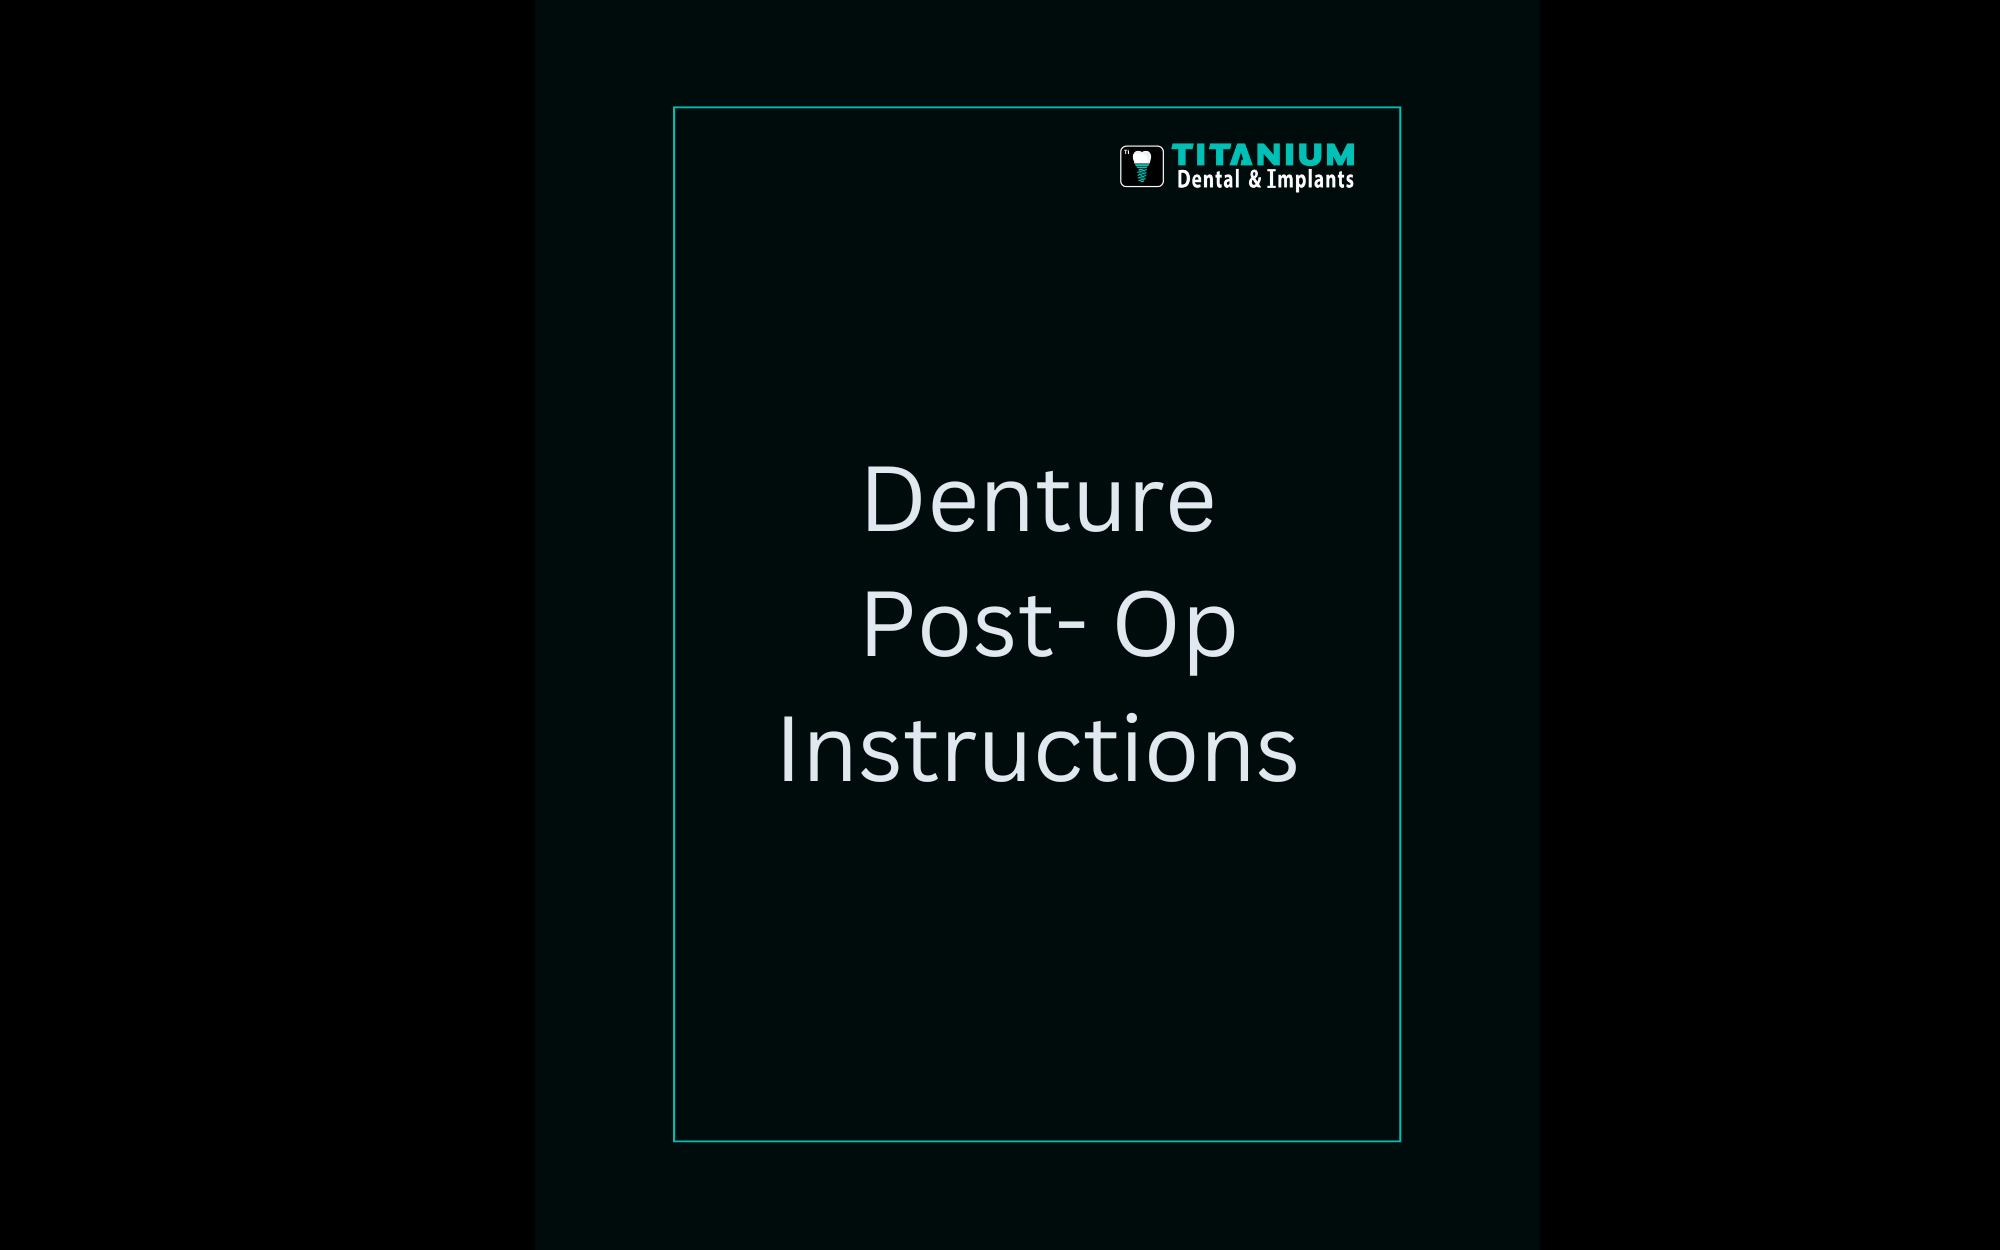 Denture Instruction